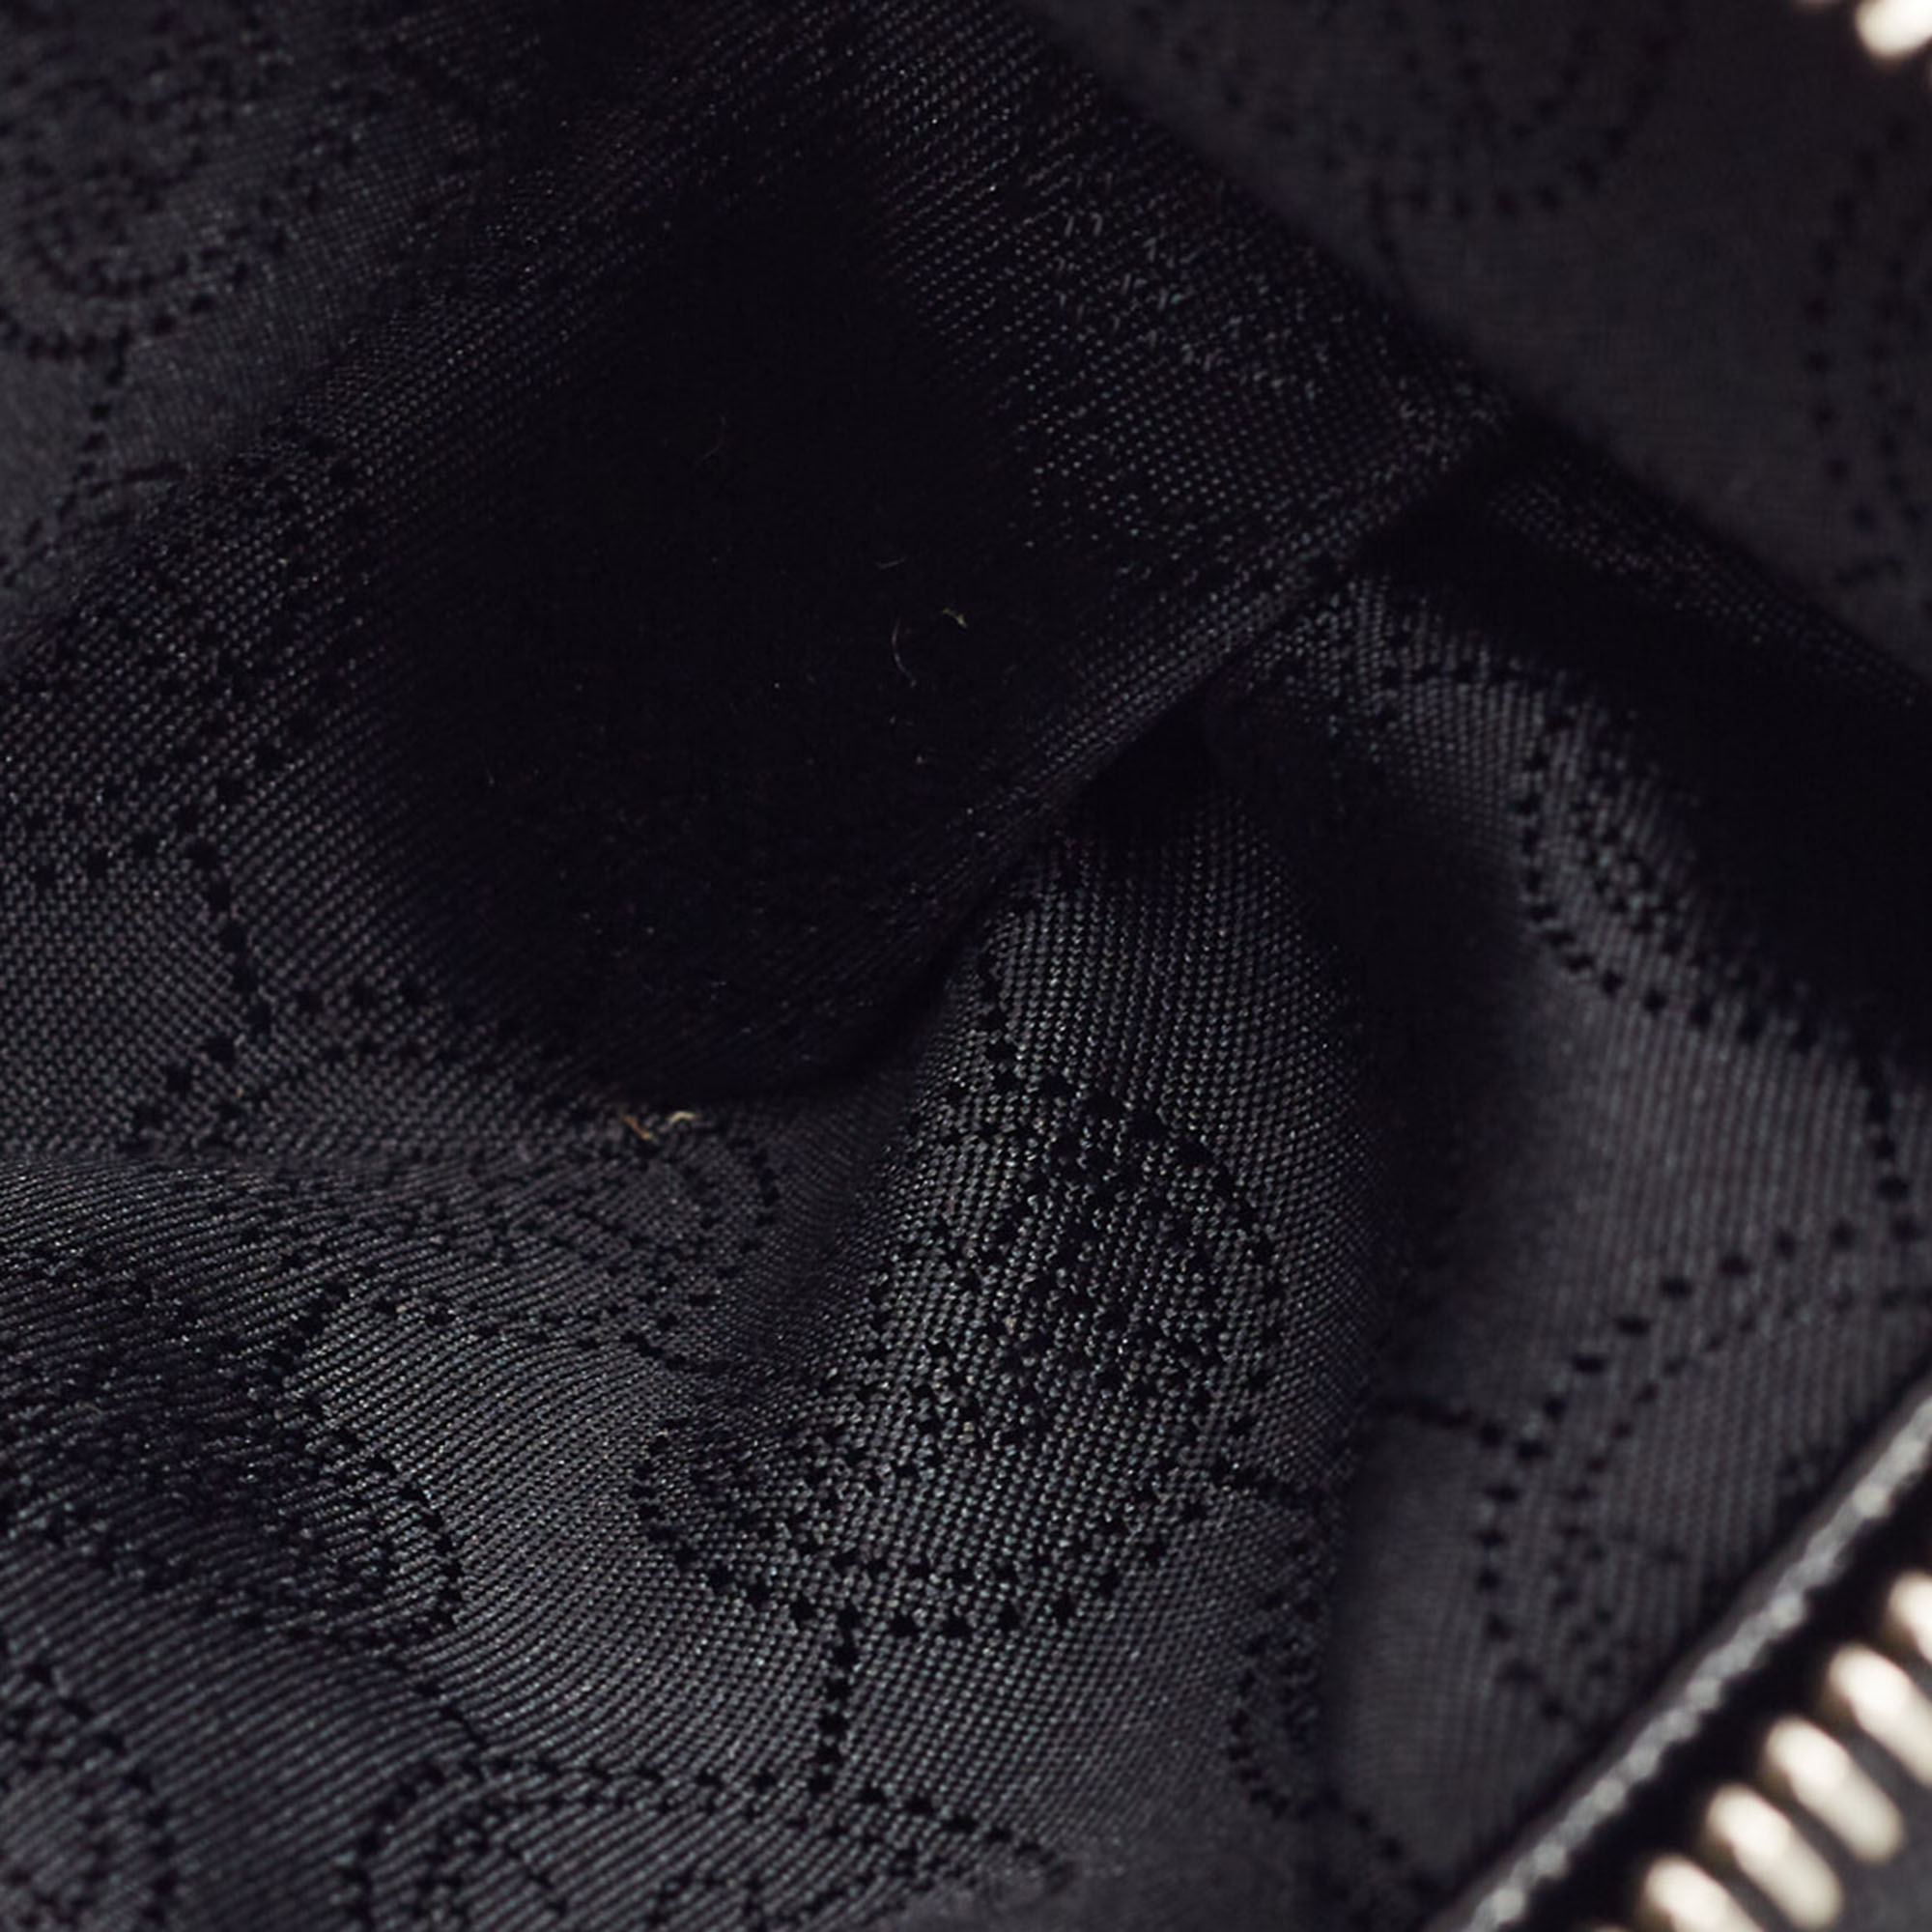 Michael Kors Black Patent Leather Zip Crossbody Bag